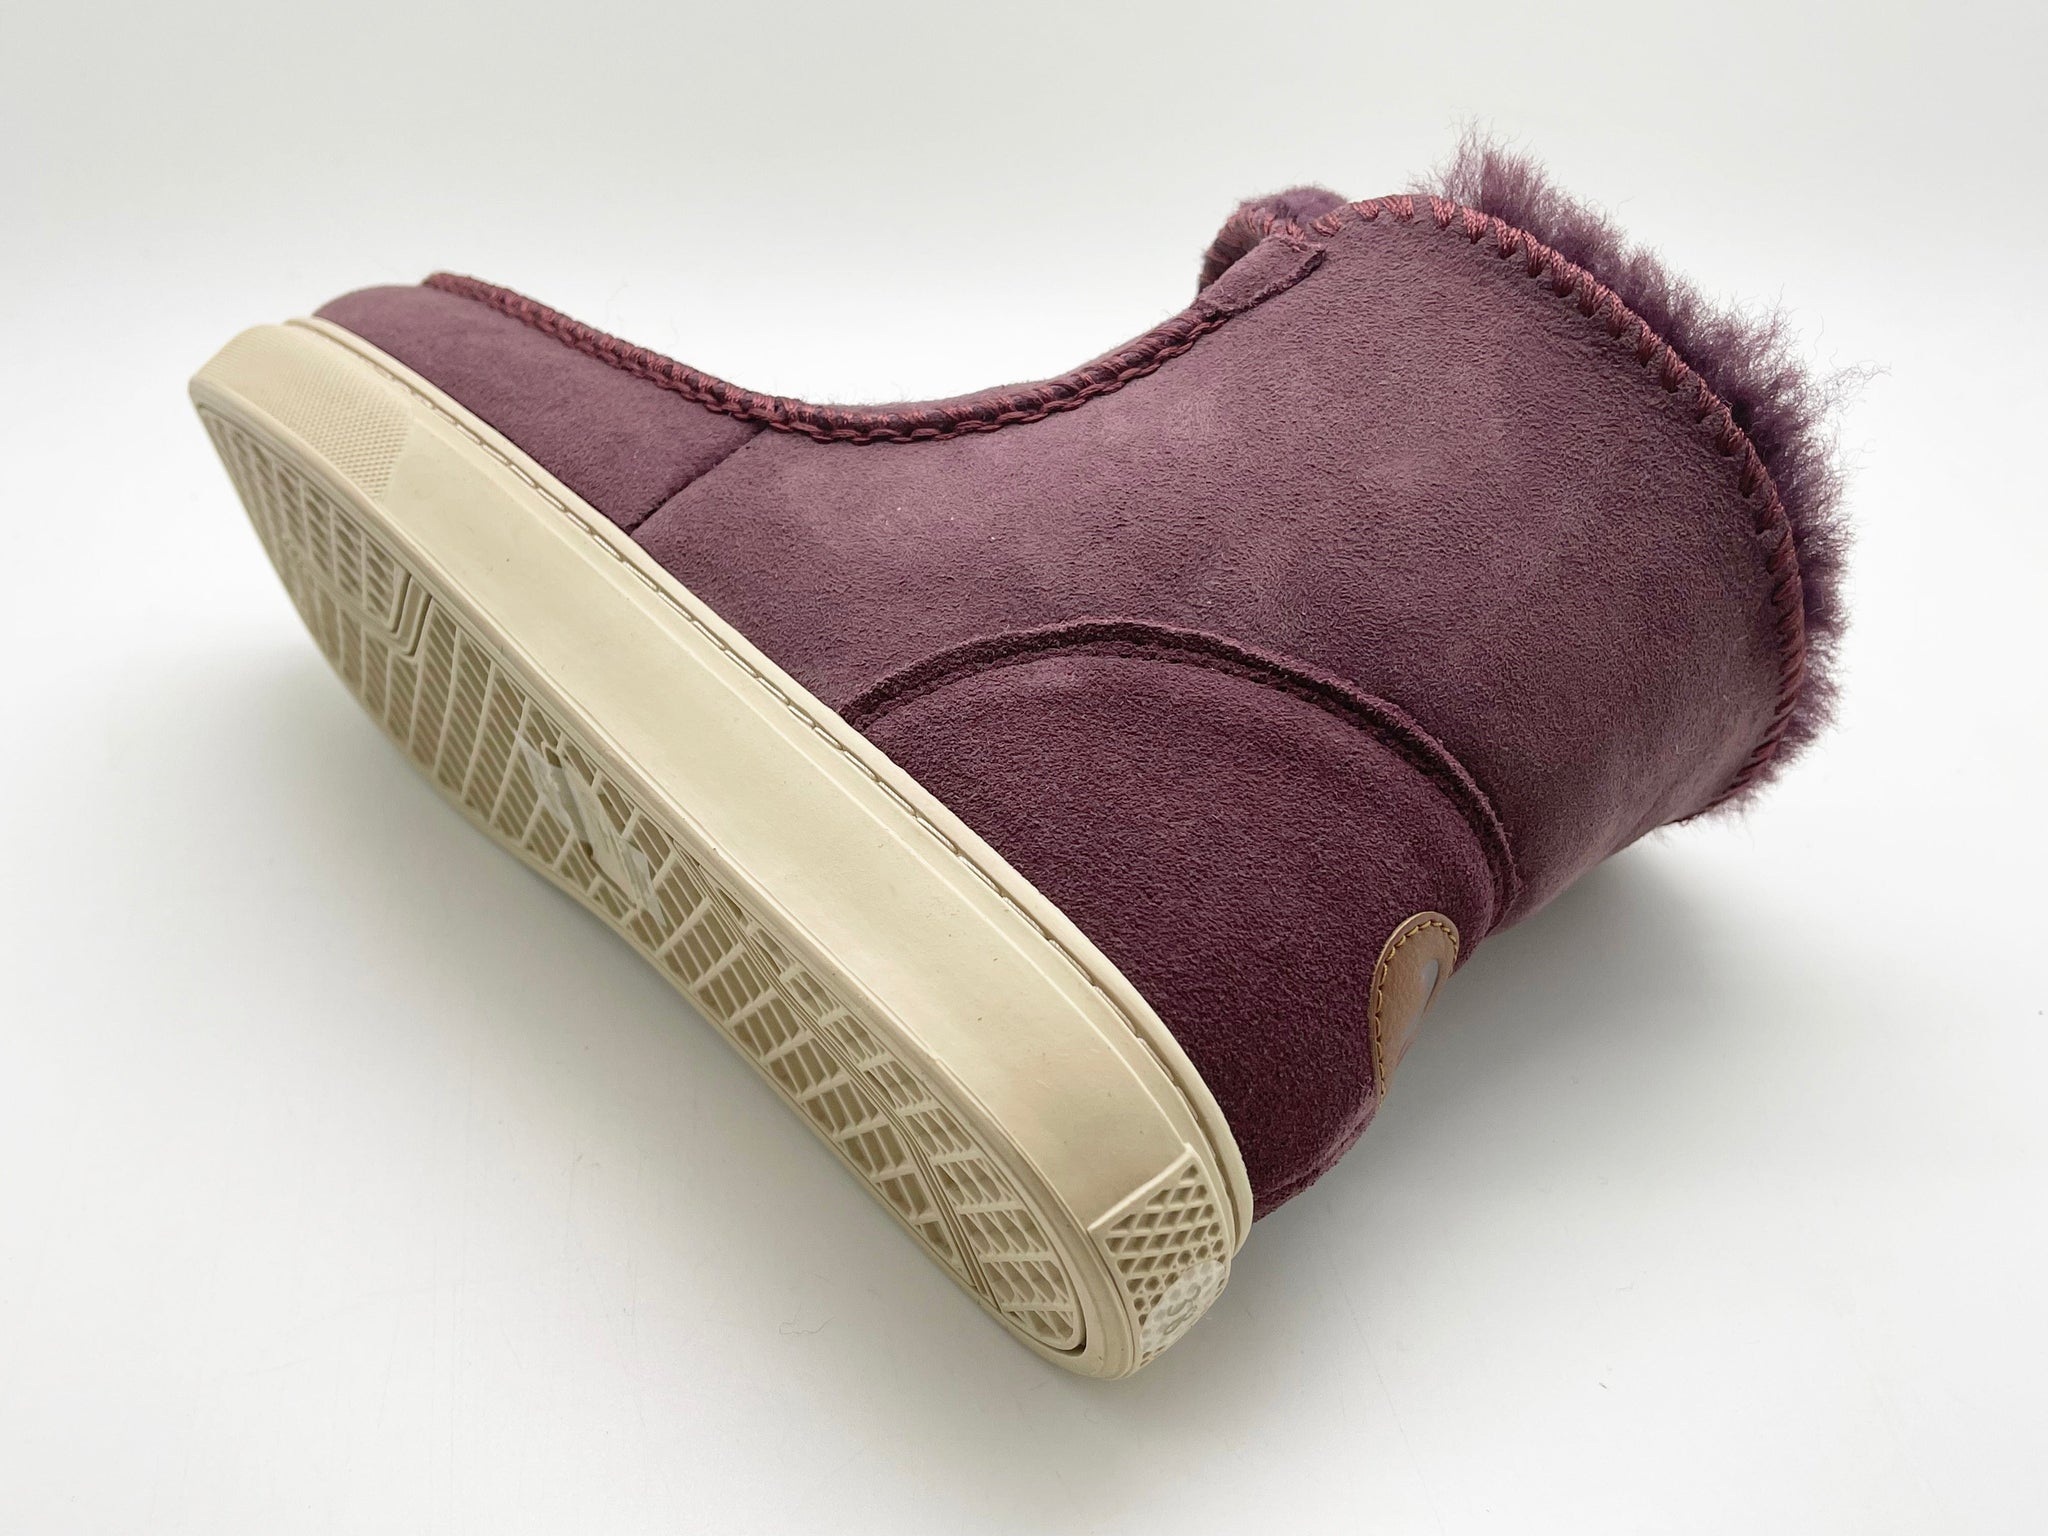 NAT 2 calzado thies 1856 ® Sneakerboot 2 granate (W) moda sostenible moda ética